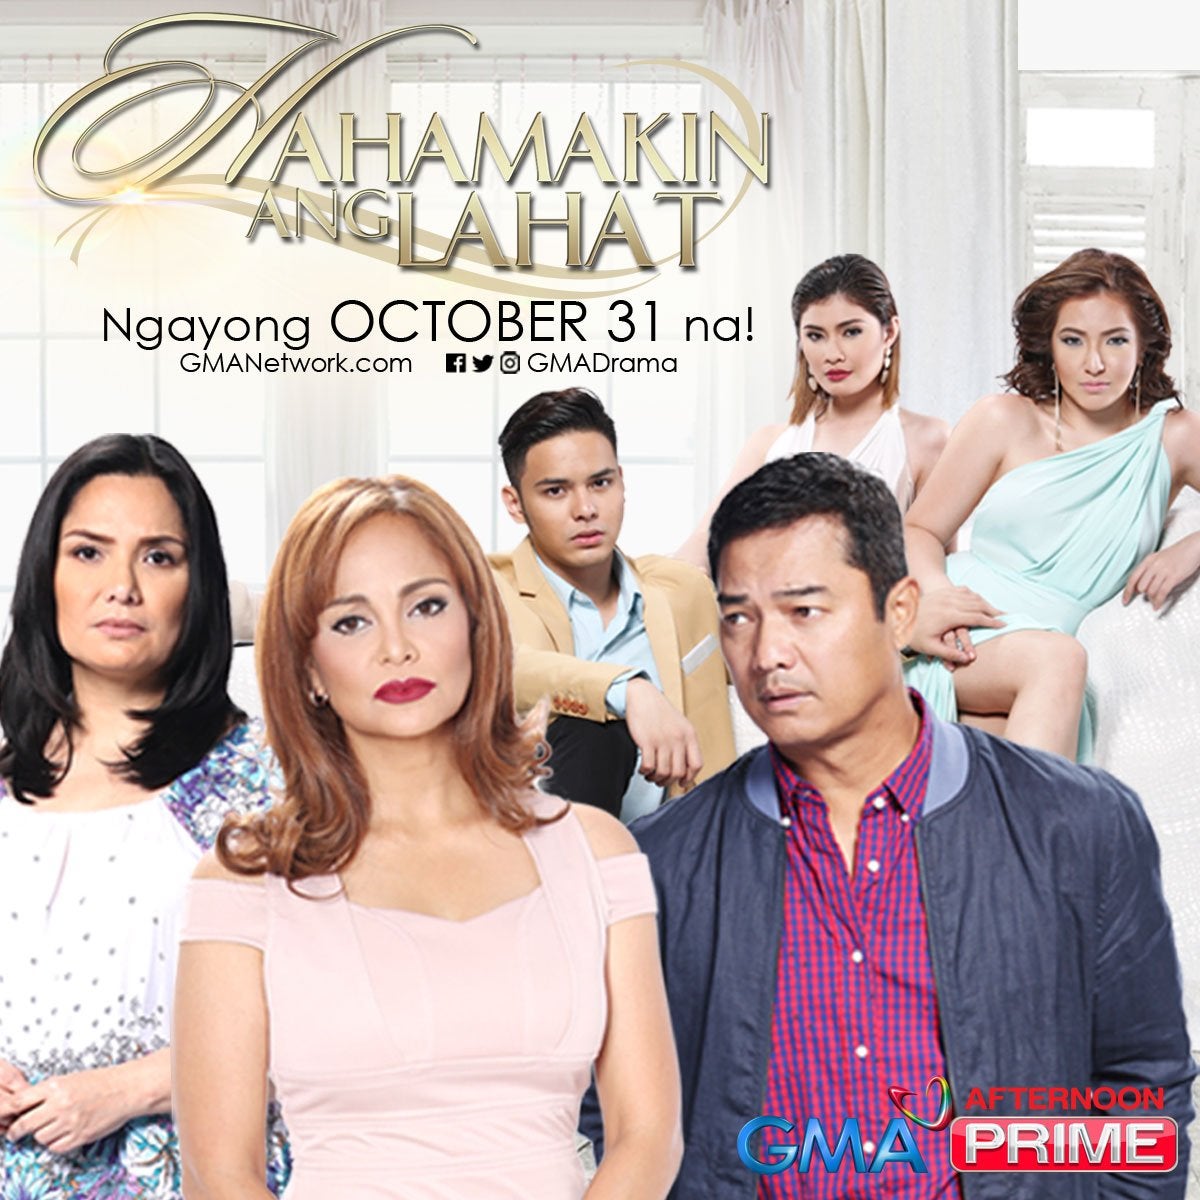 TV ratings for Hahamakin Ang Lahat in Mexico. GMA TV series